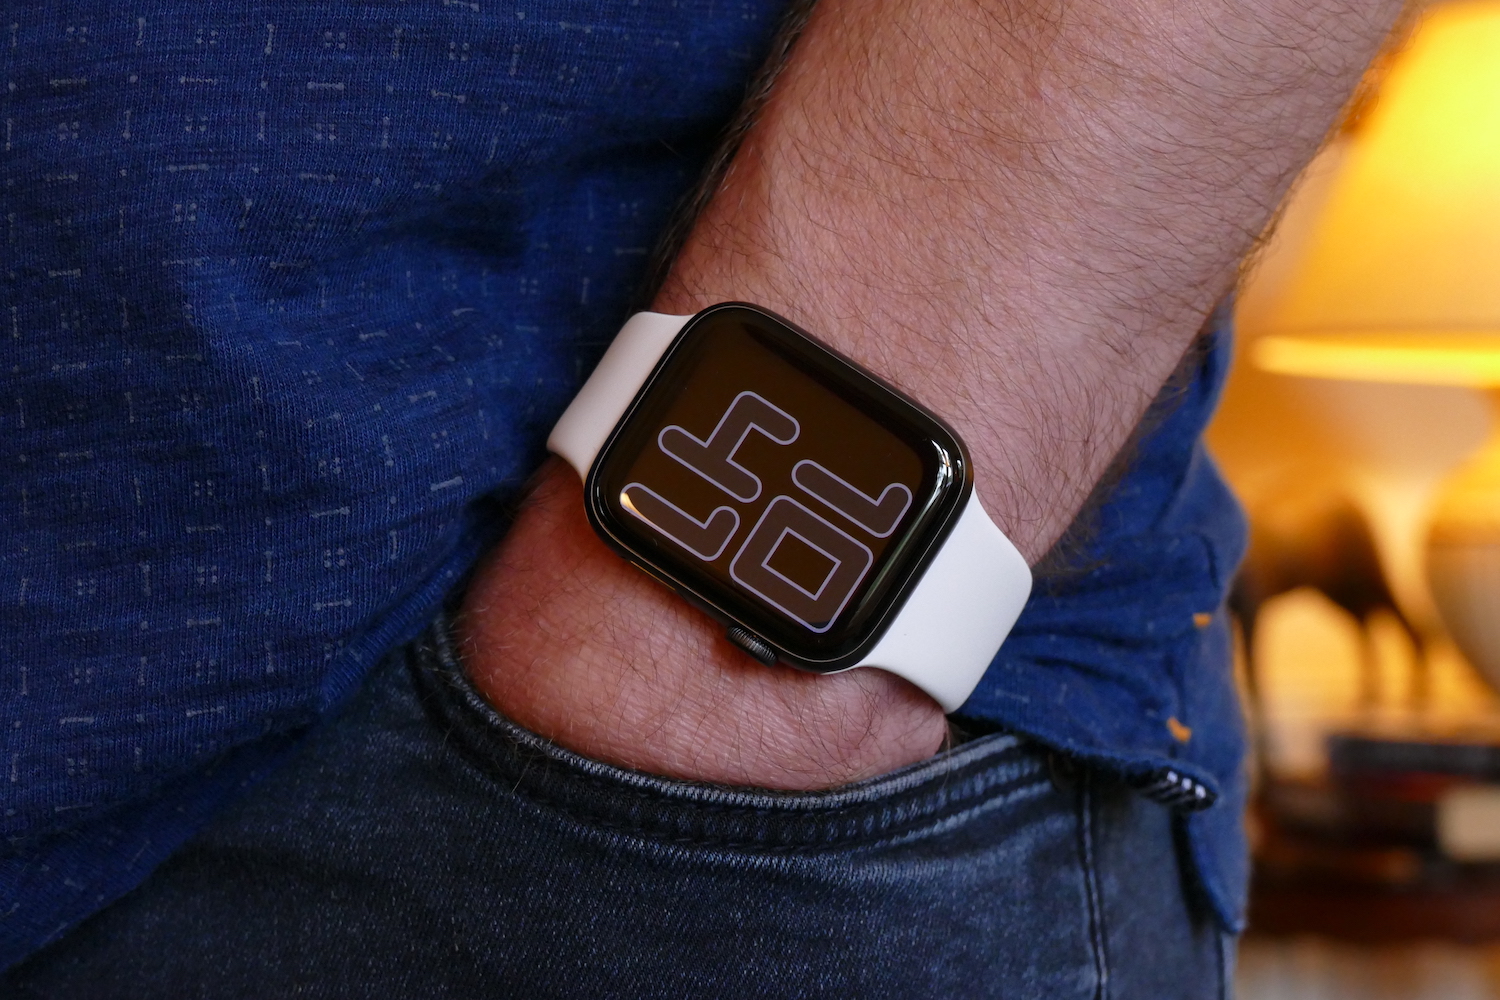 Iphone watch 5. Эппл вотч. Apple watch 5. Series 3 Apple watch 45mm. Эпл вотч 44 мм на мужской руке.